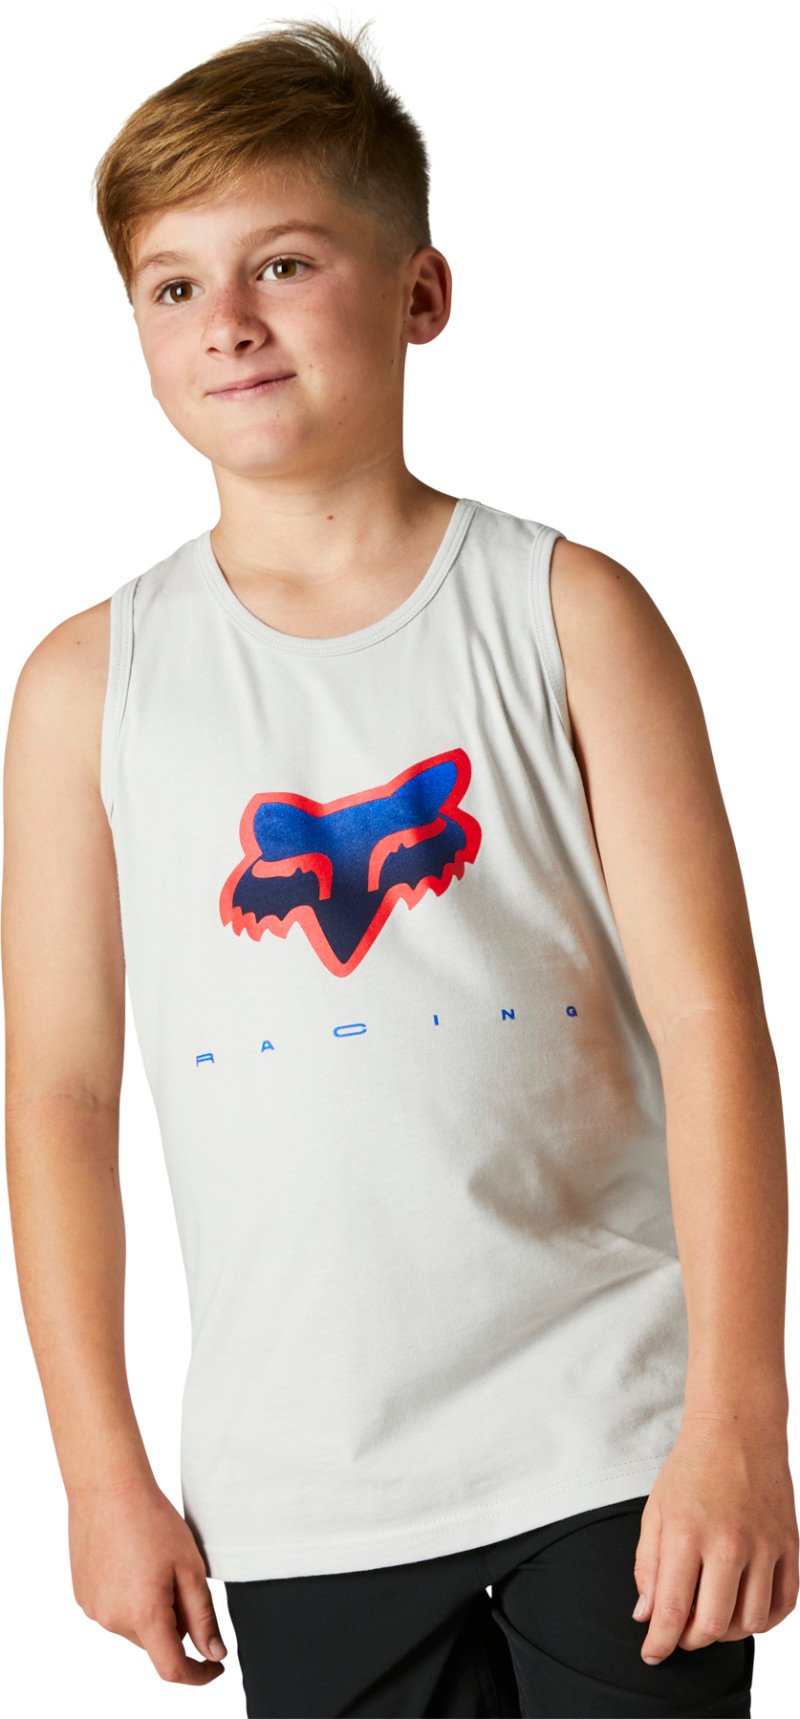 fox racing tank top shirts for kids rkane head